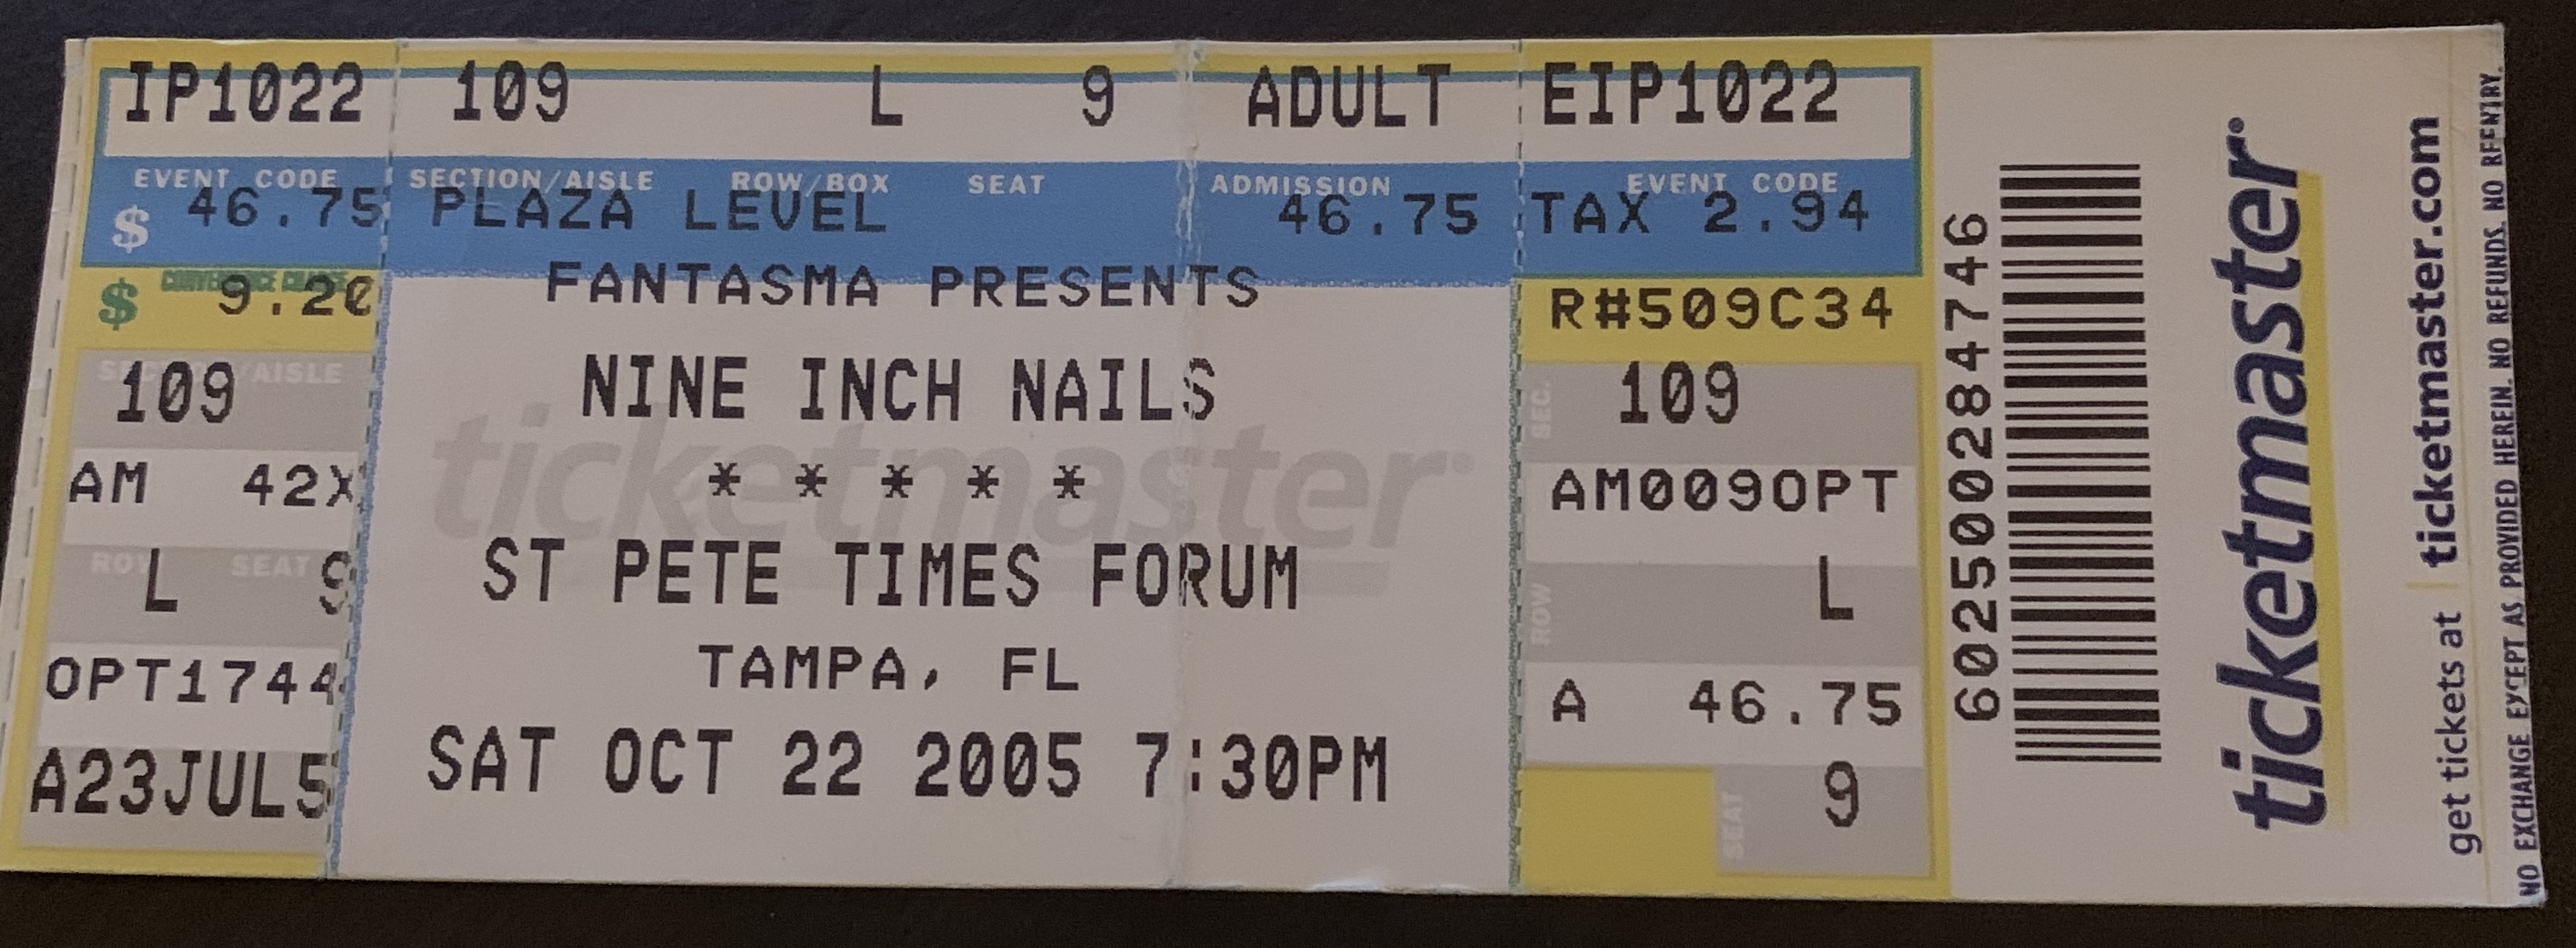 2005/10/22 Ticket